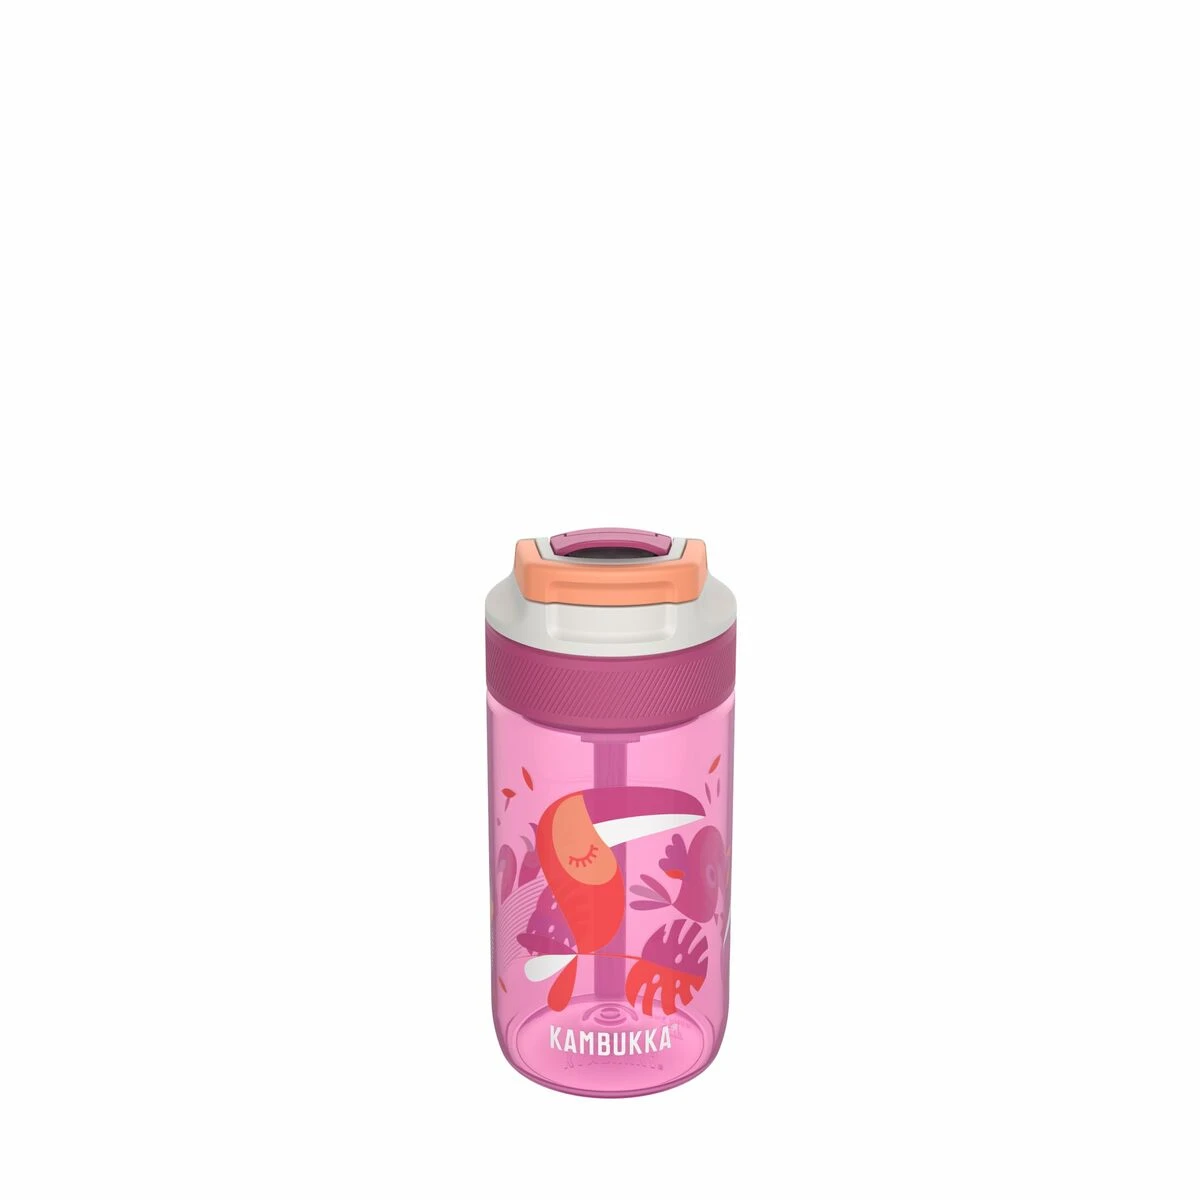 Pink Kambukka bottle with tropical patterns